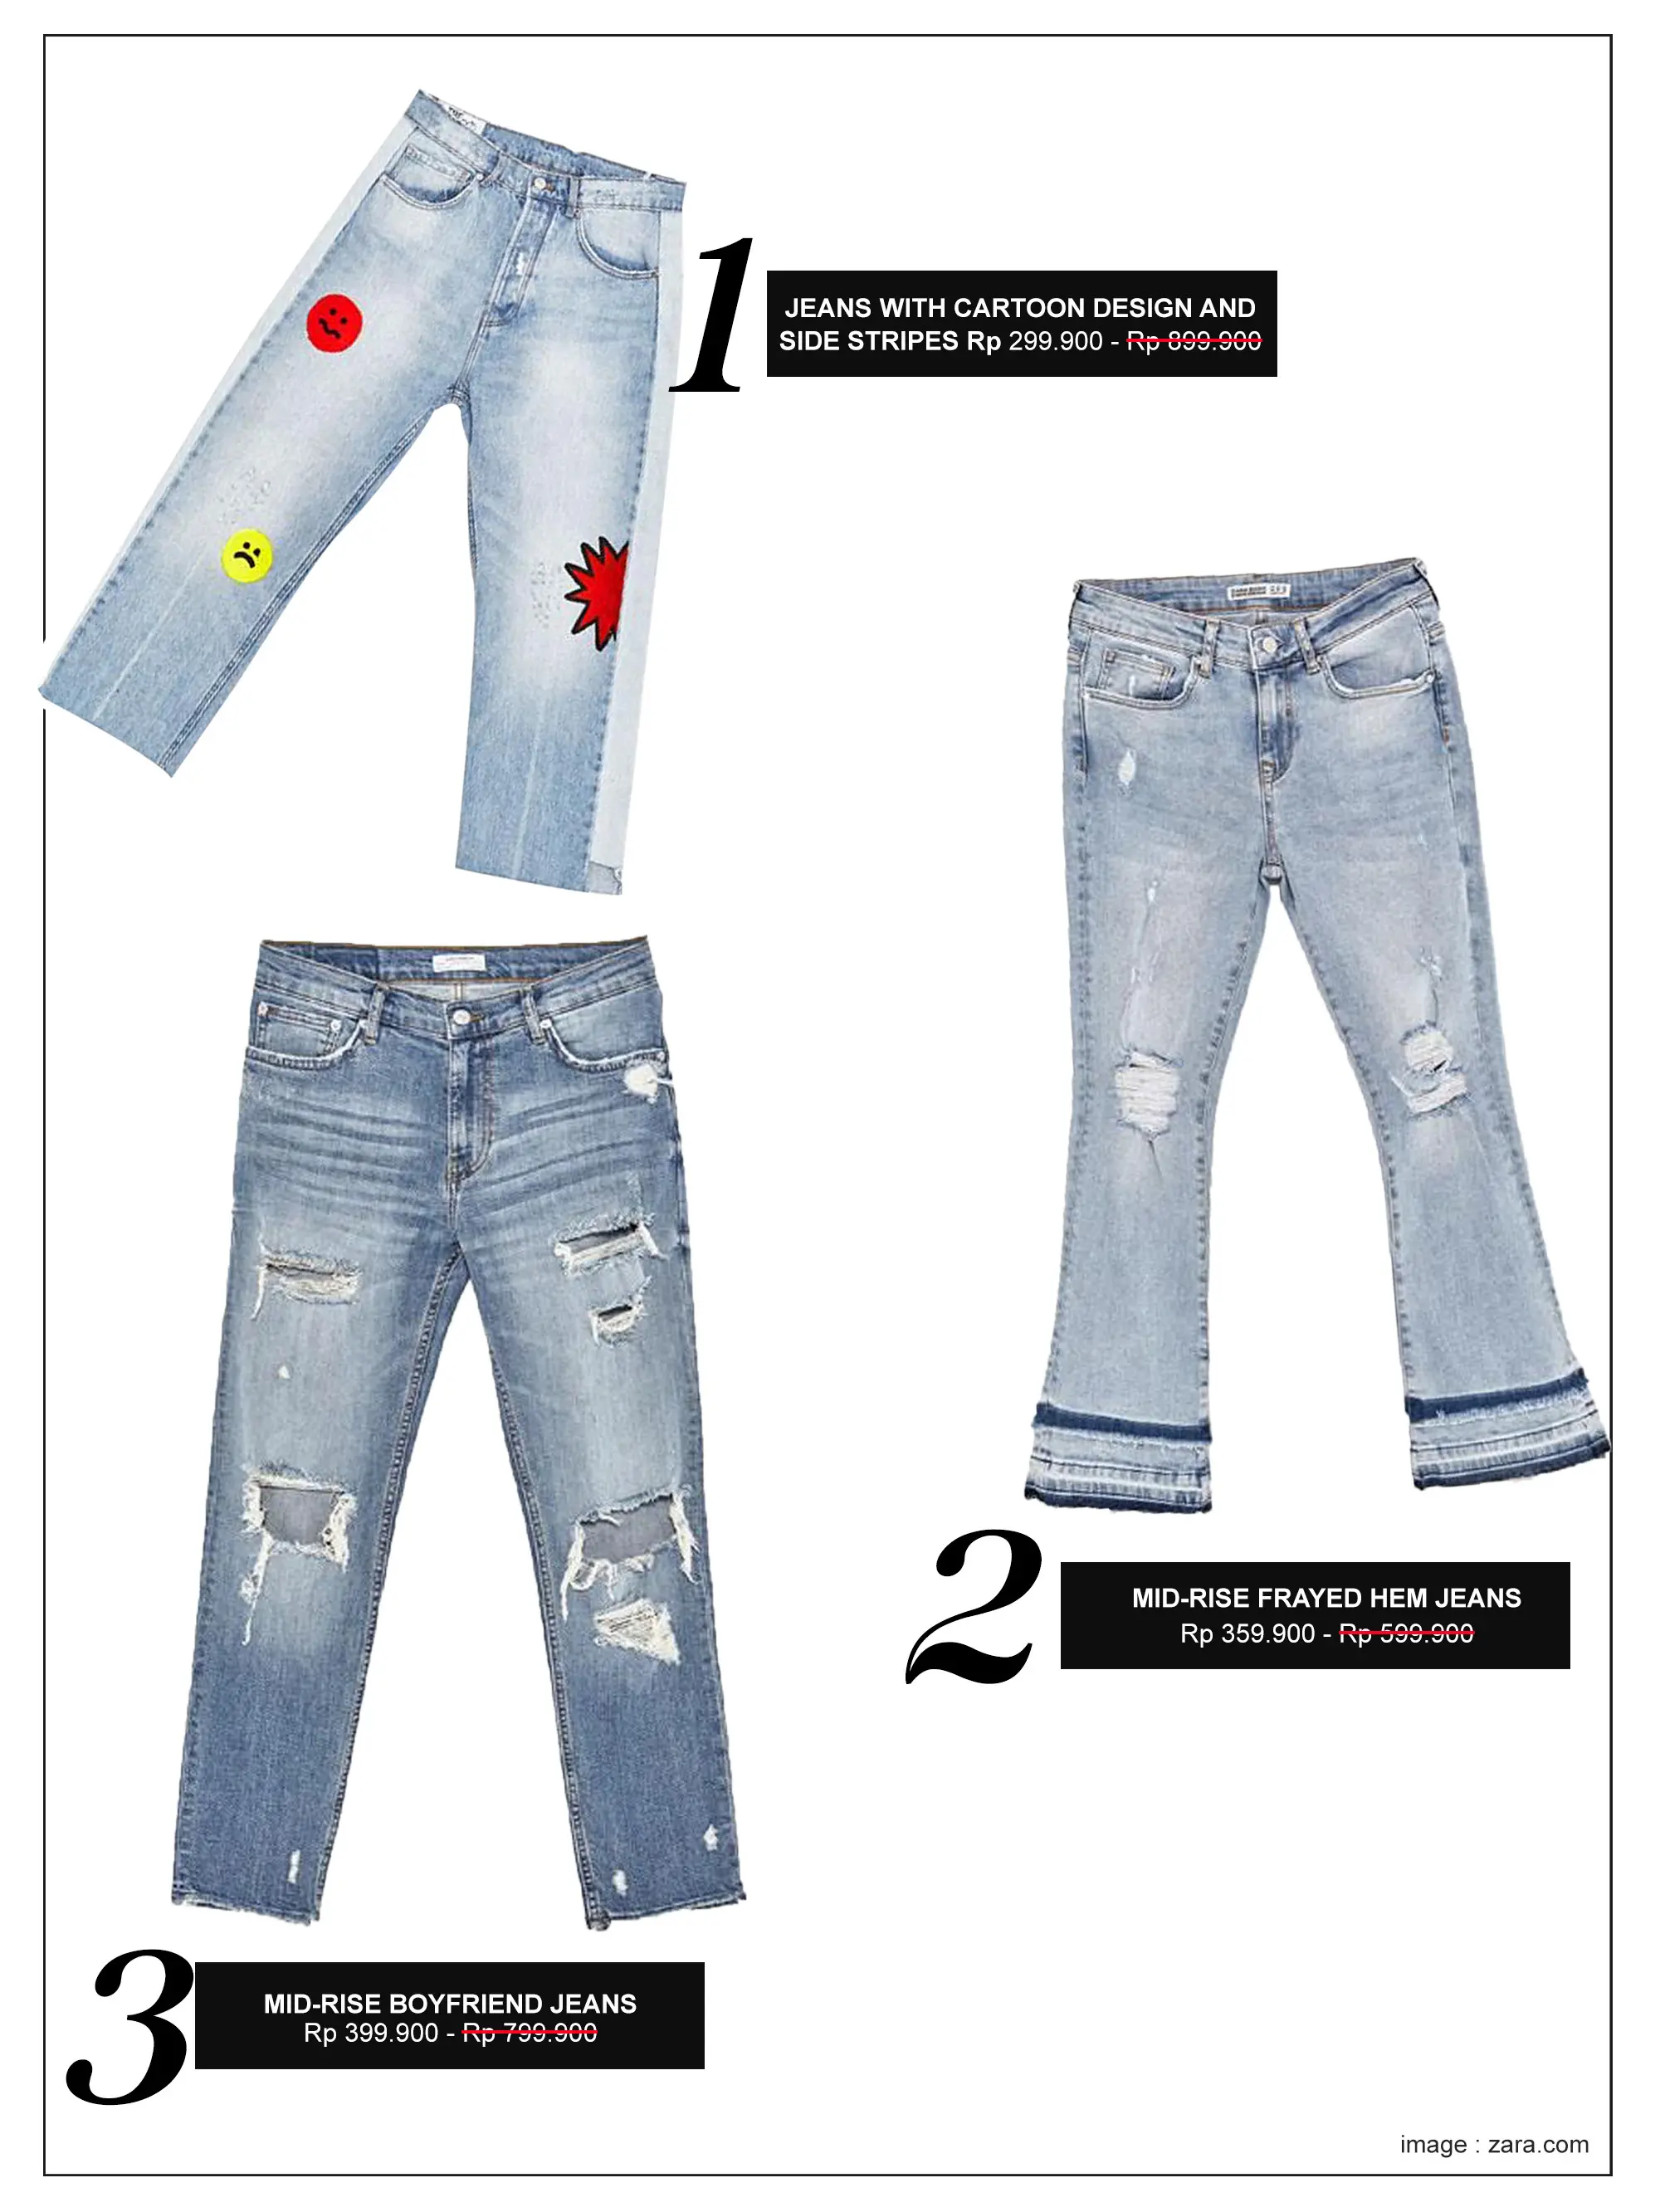 Jeans trendi yang diskon. (Image: zara.com. DI: Muhammad Iqbal Nurfajri)